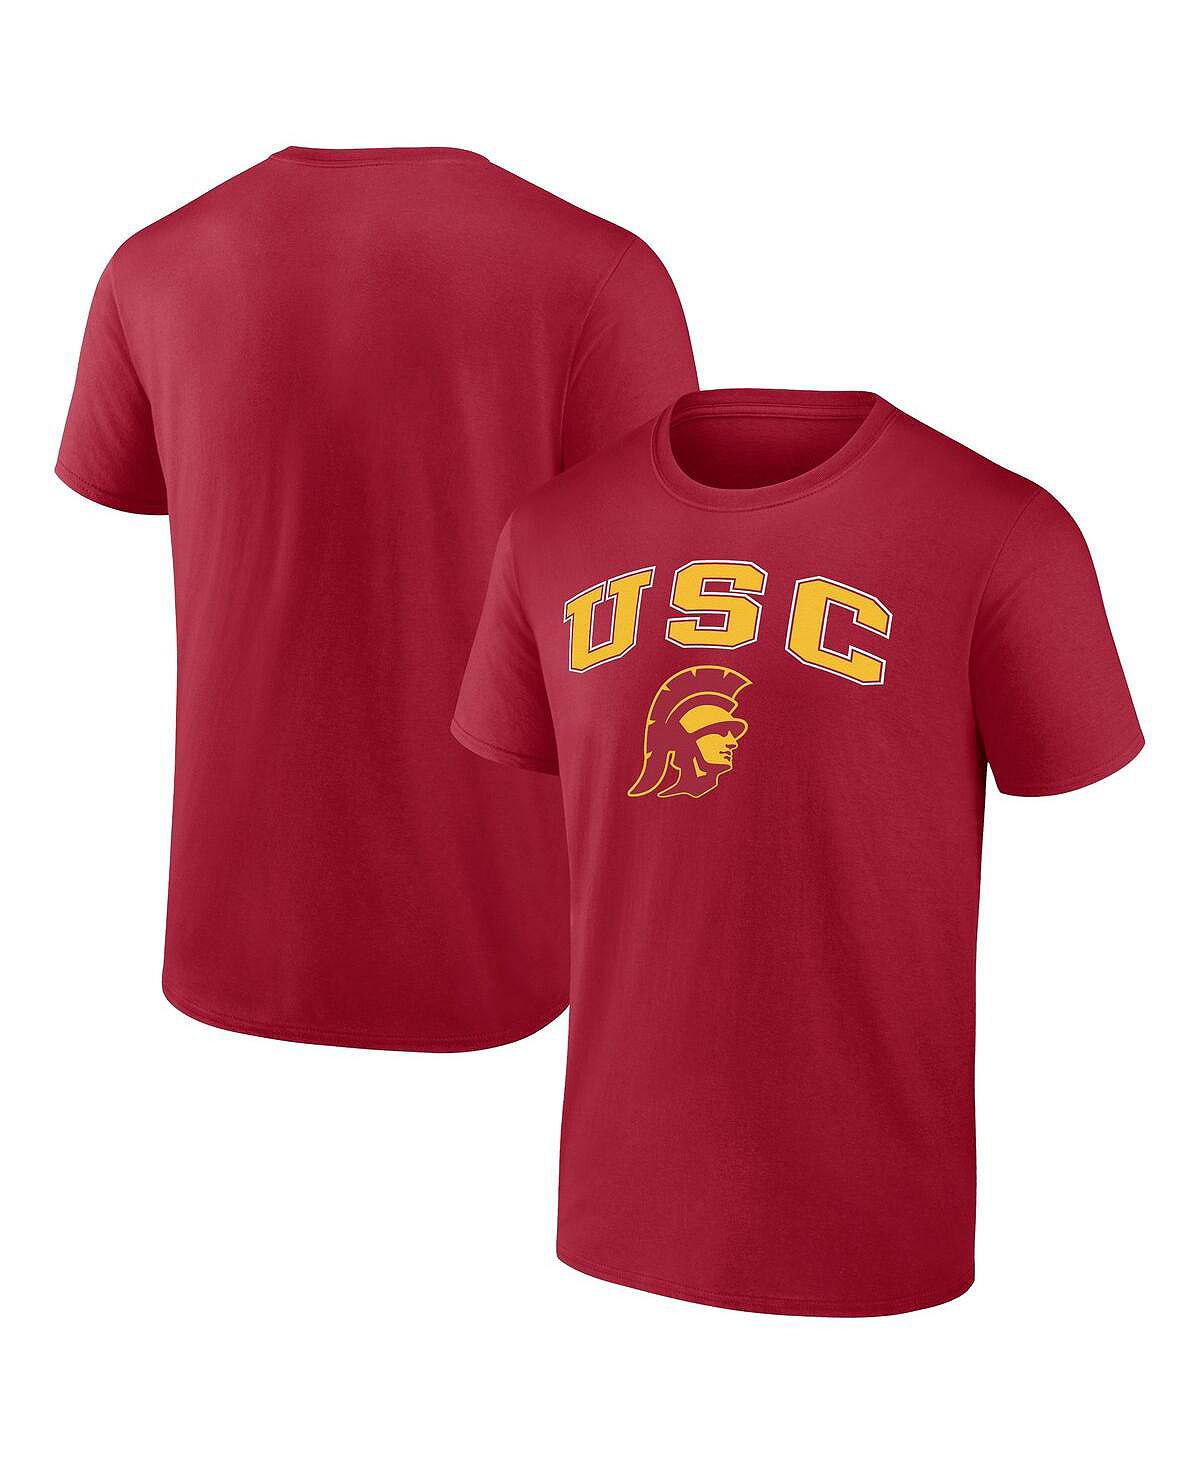 Мужская футболка с логотипом Cardinal USC Trojans Campus Fanatics